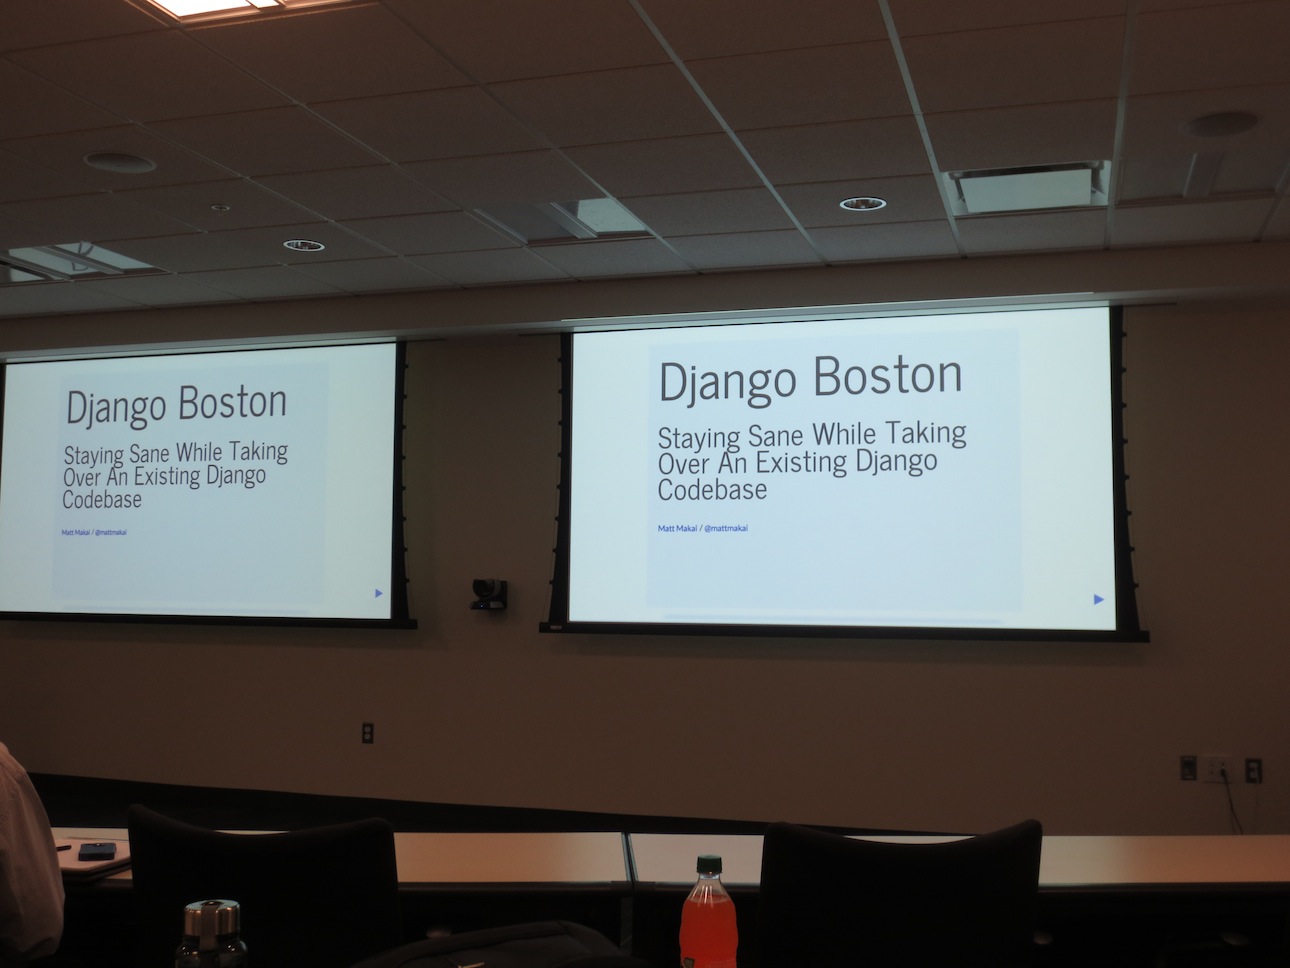 Django Boston presentation slides projected on the screen.